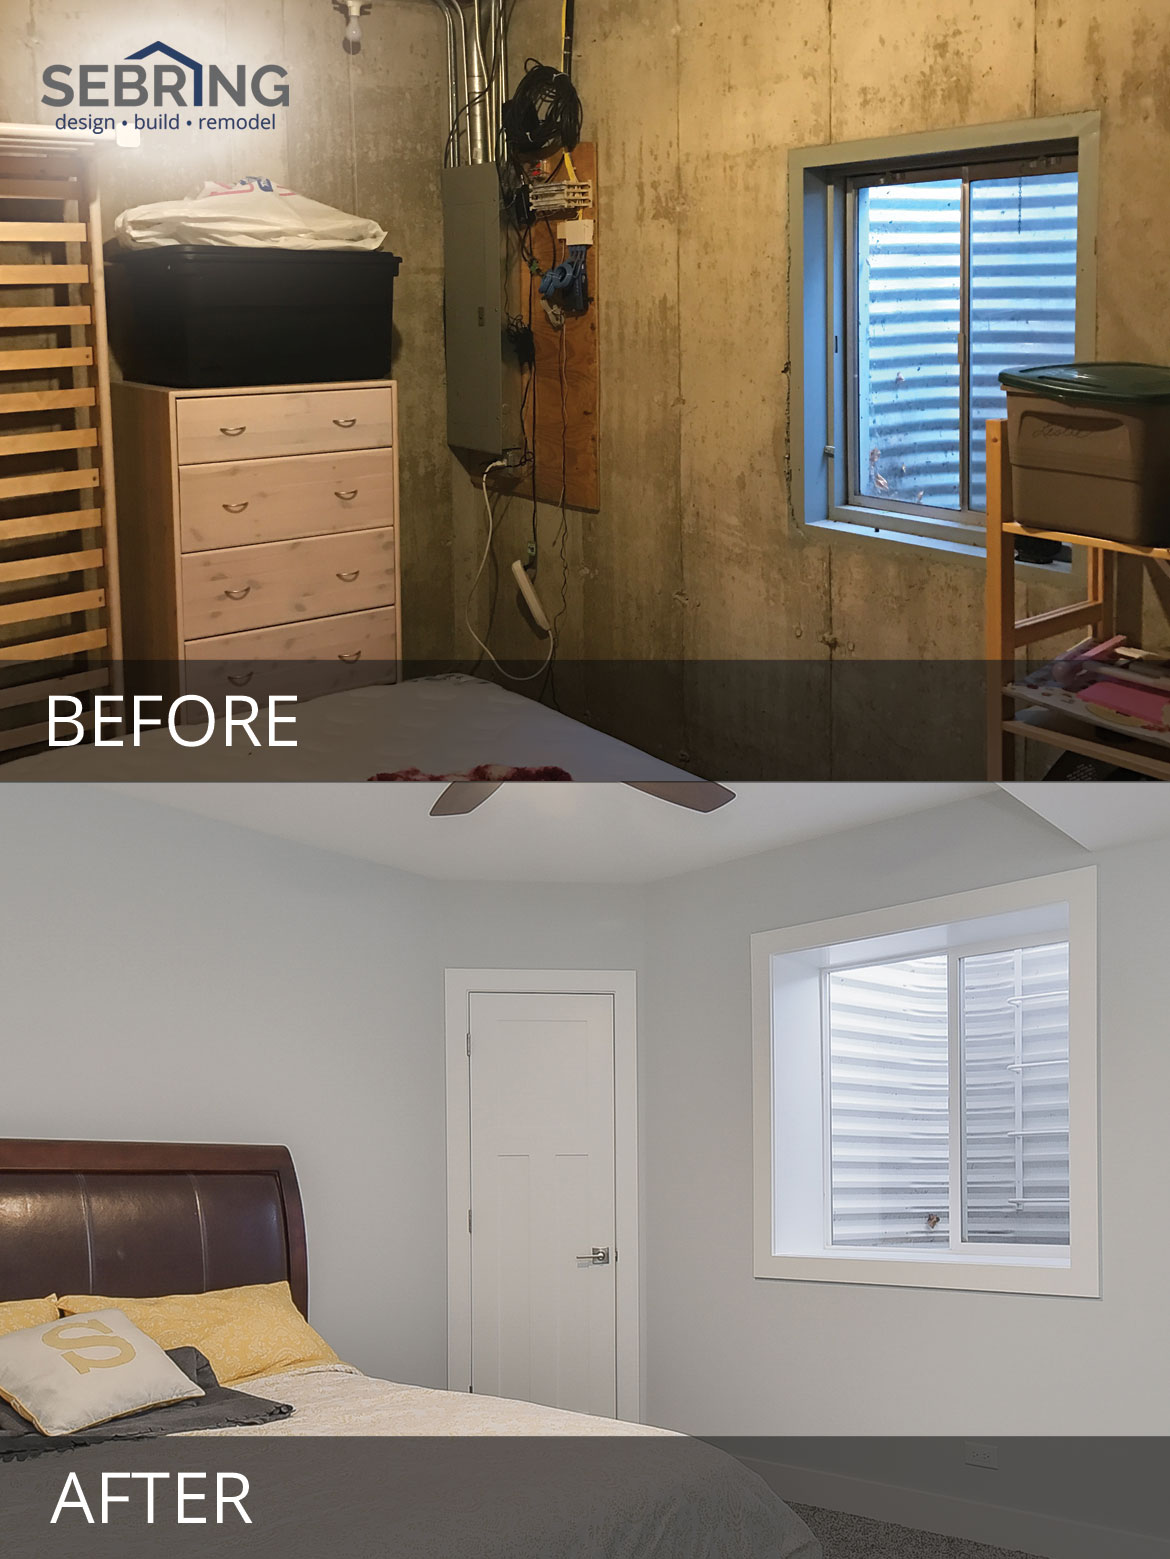 Elmhurst basement remodeling project pictures Before and After Pictures - Sebring Design Build